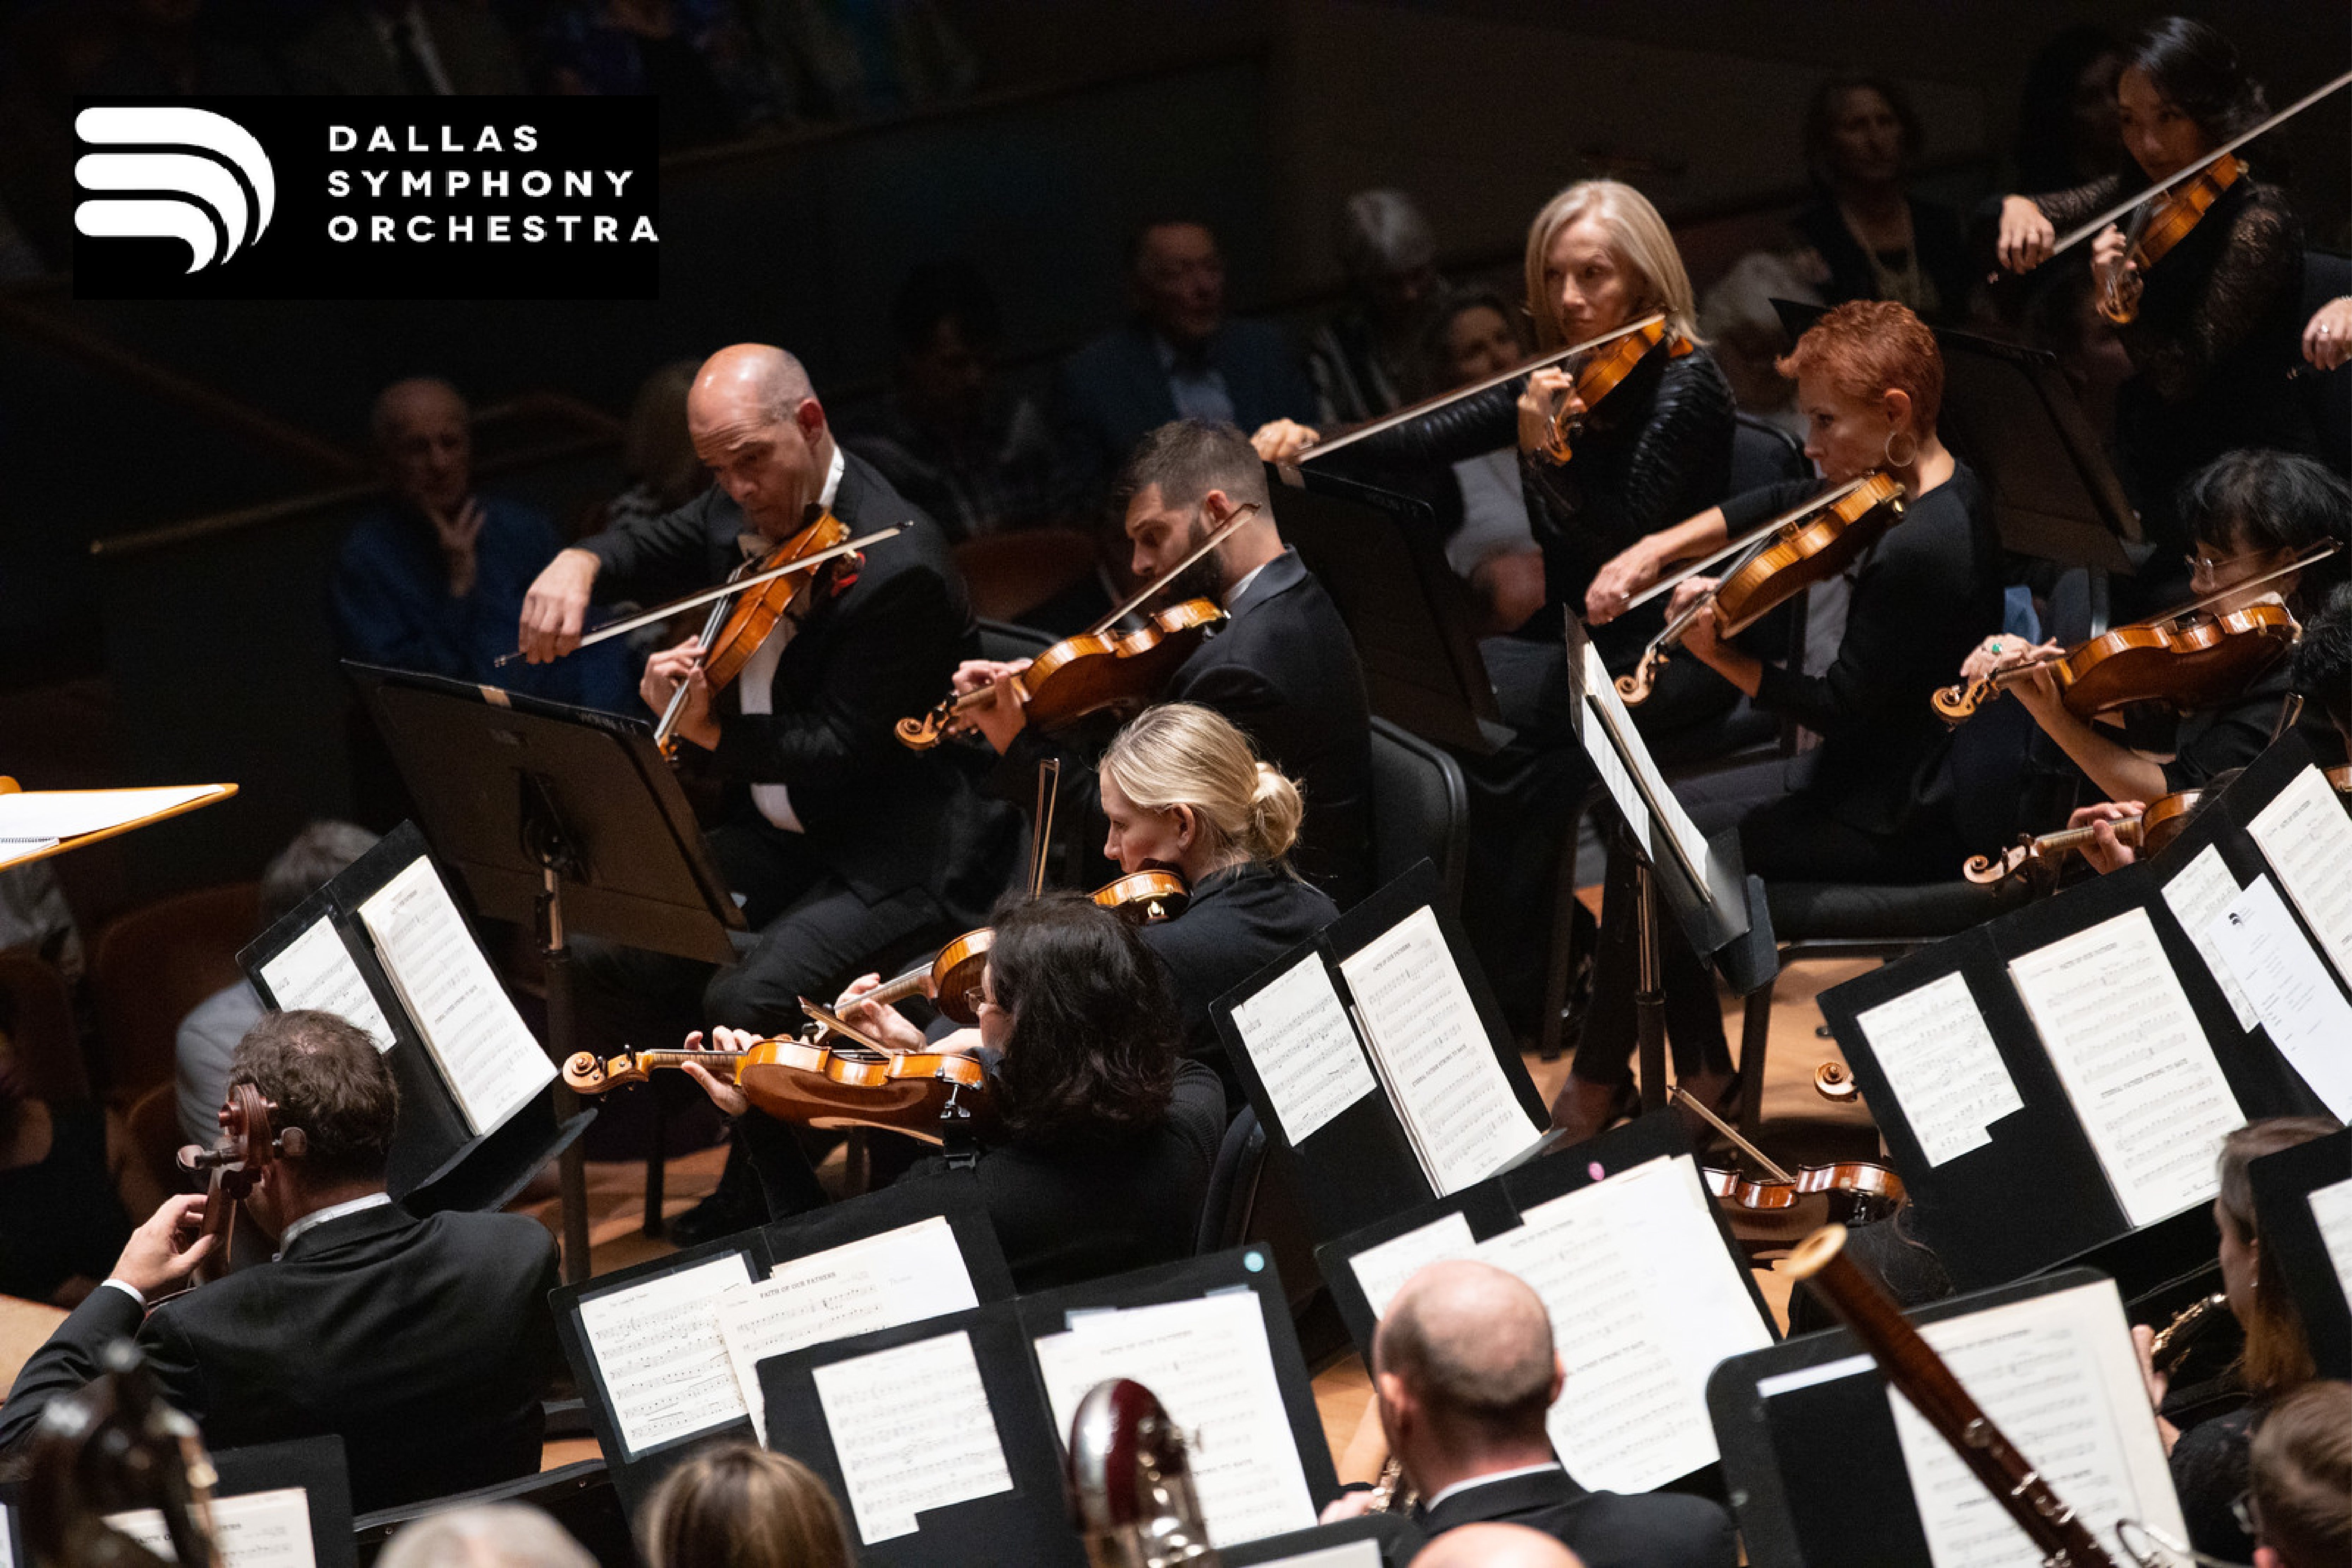 Coppell Arts Center Presents: The Dallas Symphony Orchestra